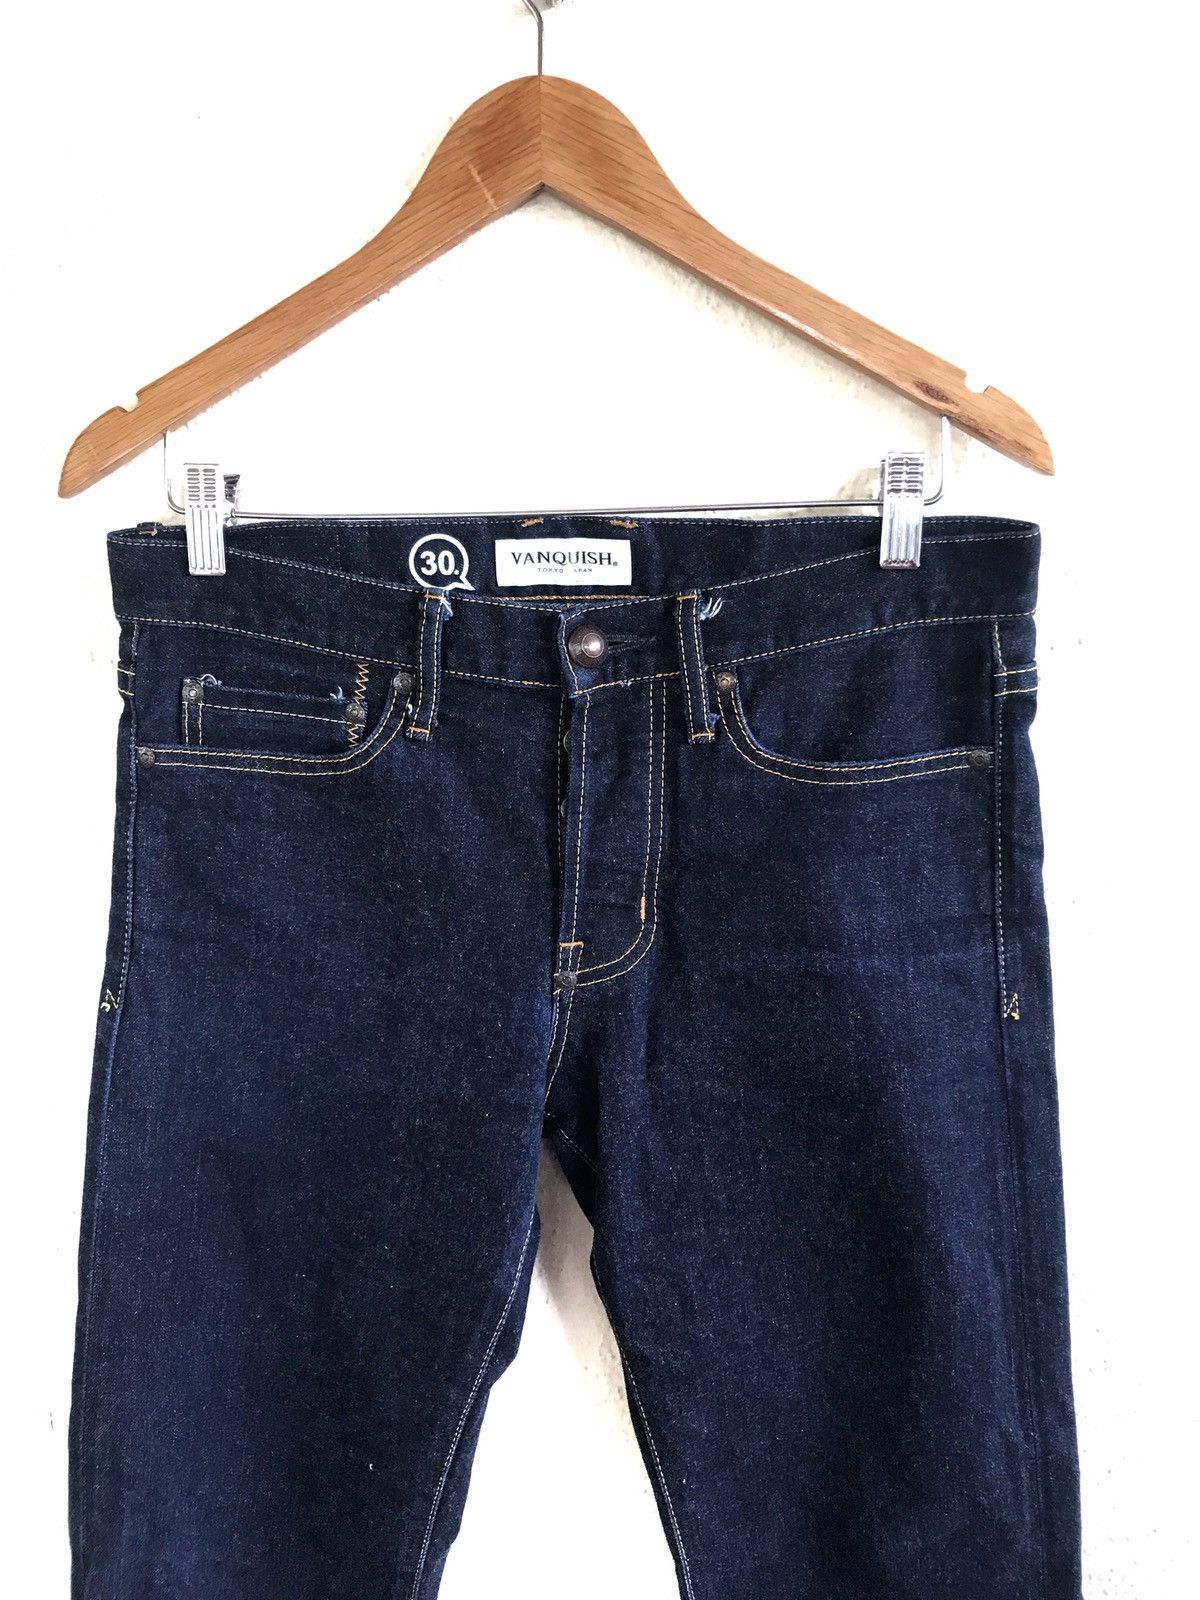 VANQUISH Japan Selvedge Skinny Jeans - 2